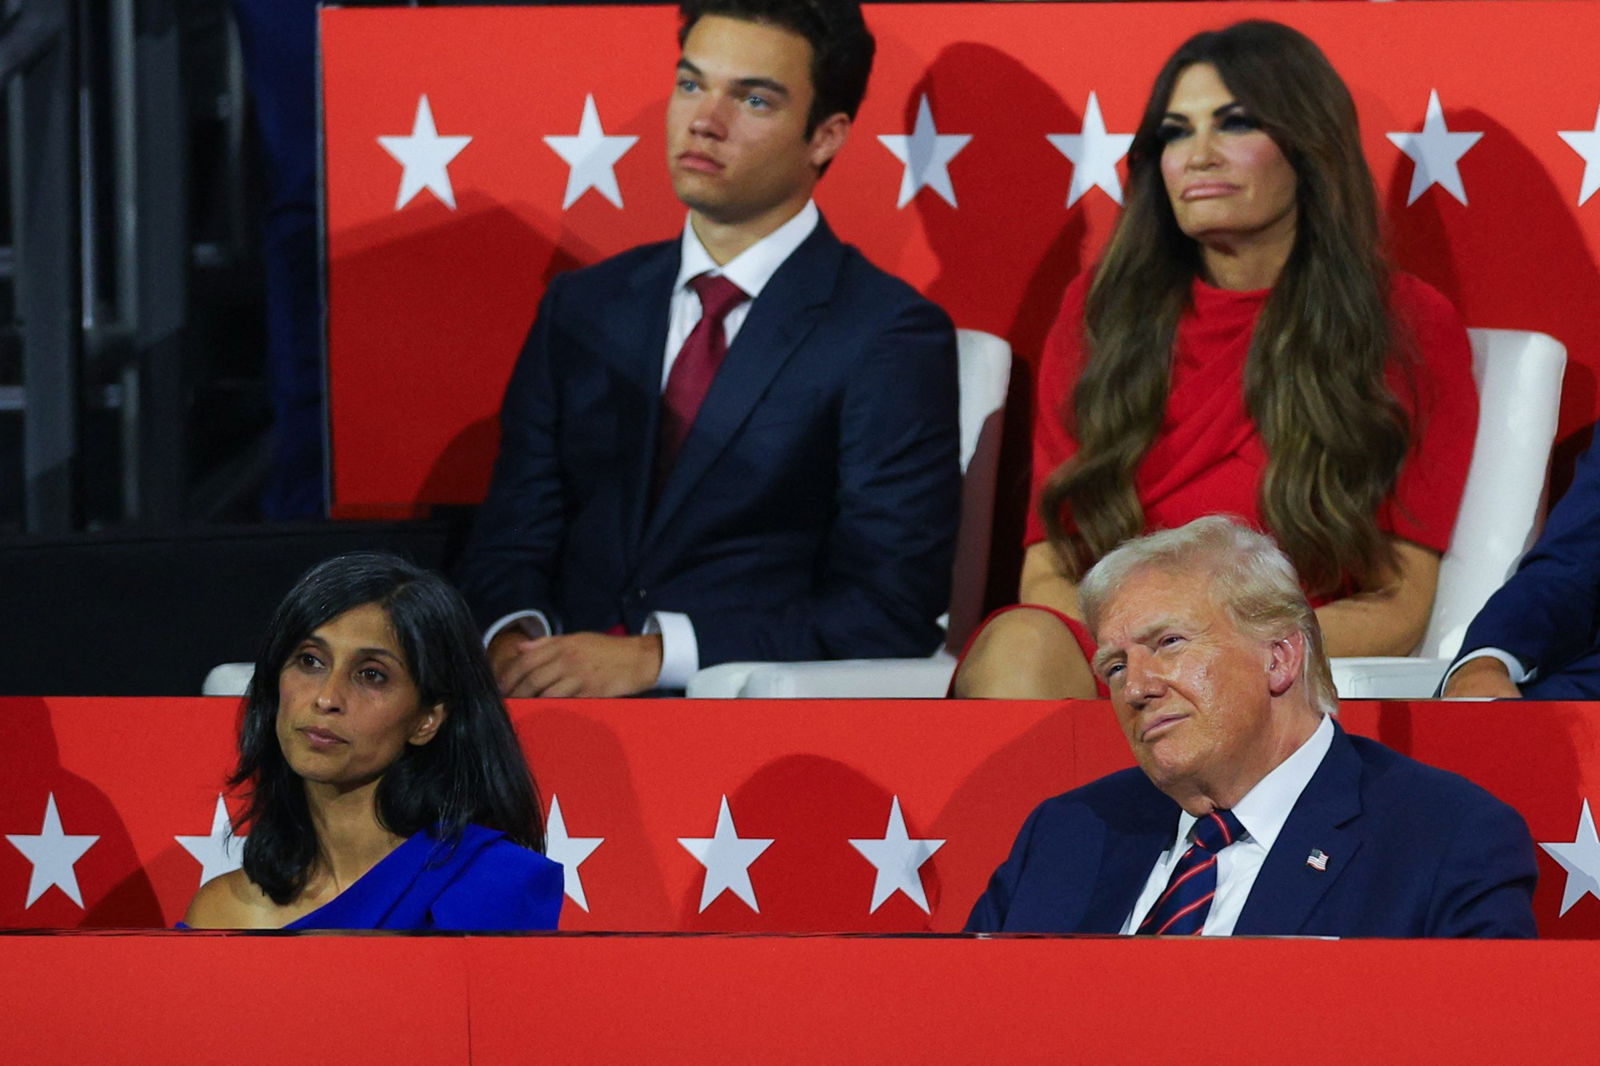 Trump sits next to Usha Vance